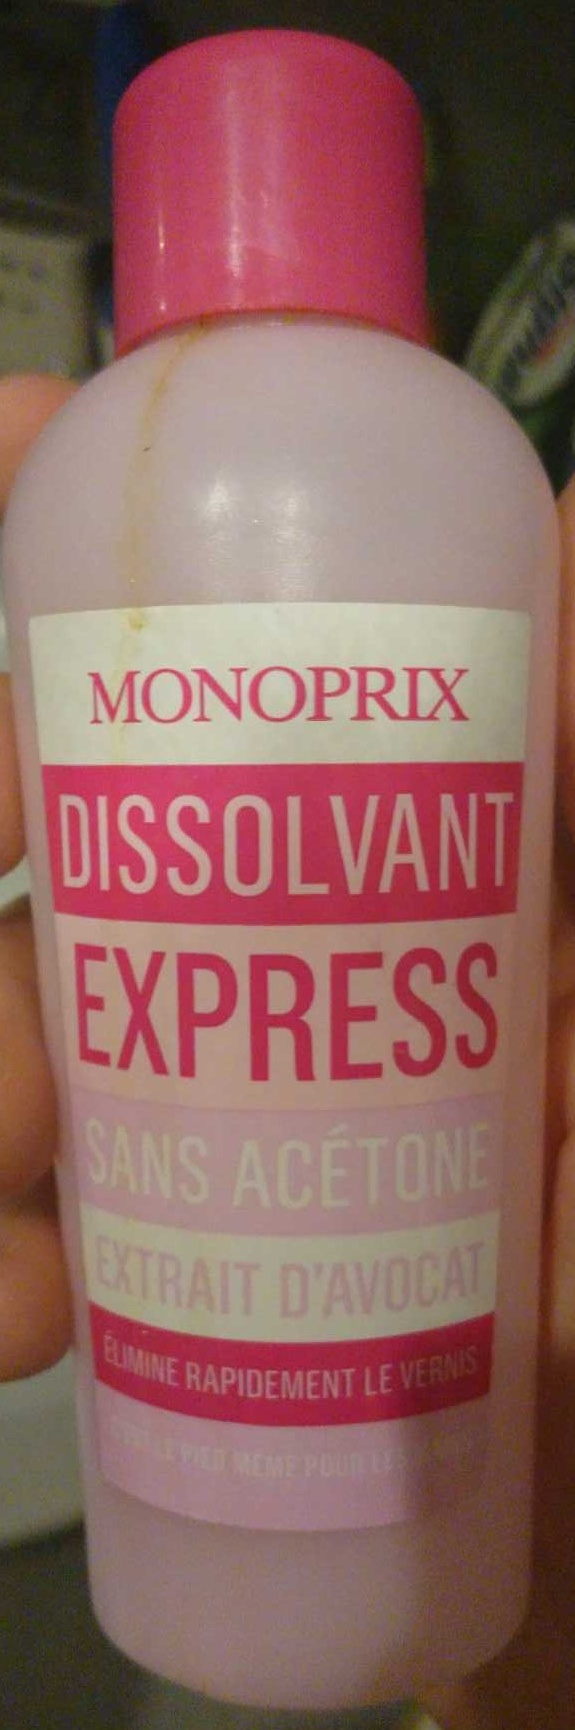 Dissolvant express sans acétone - Product - fr